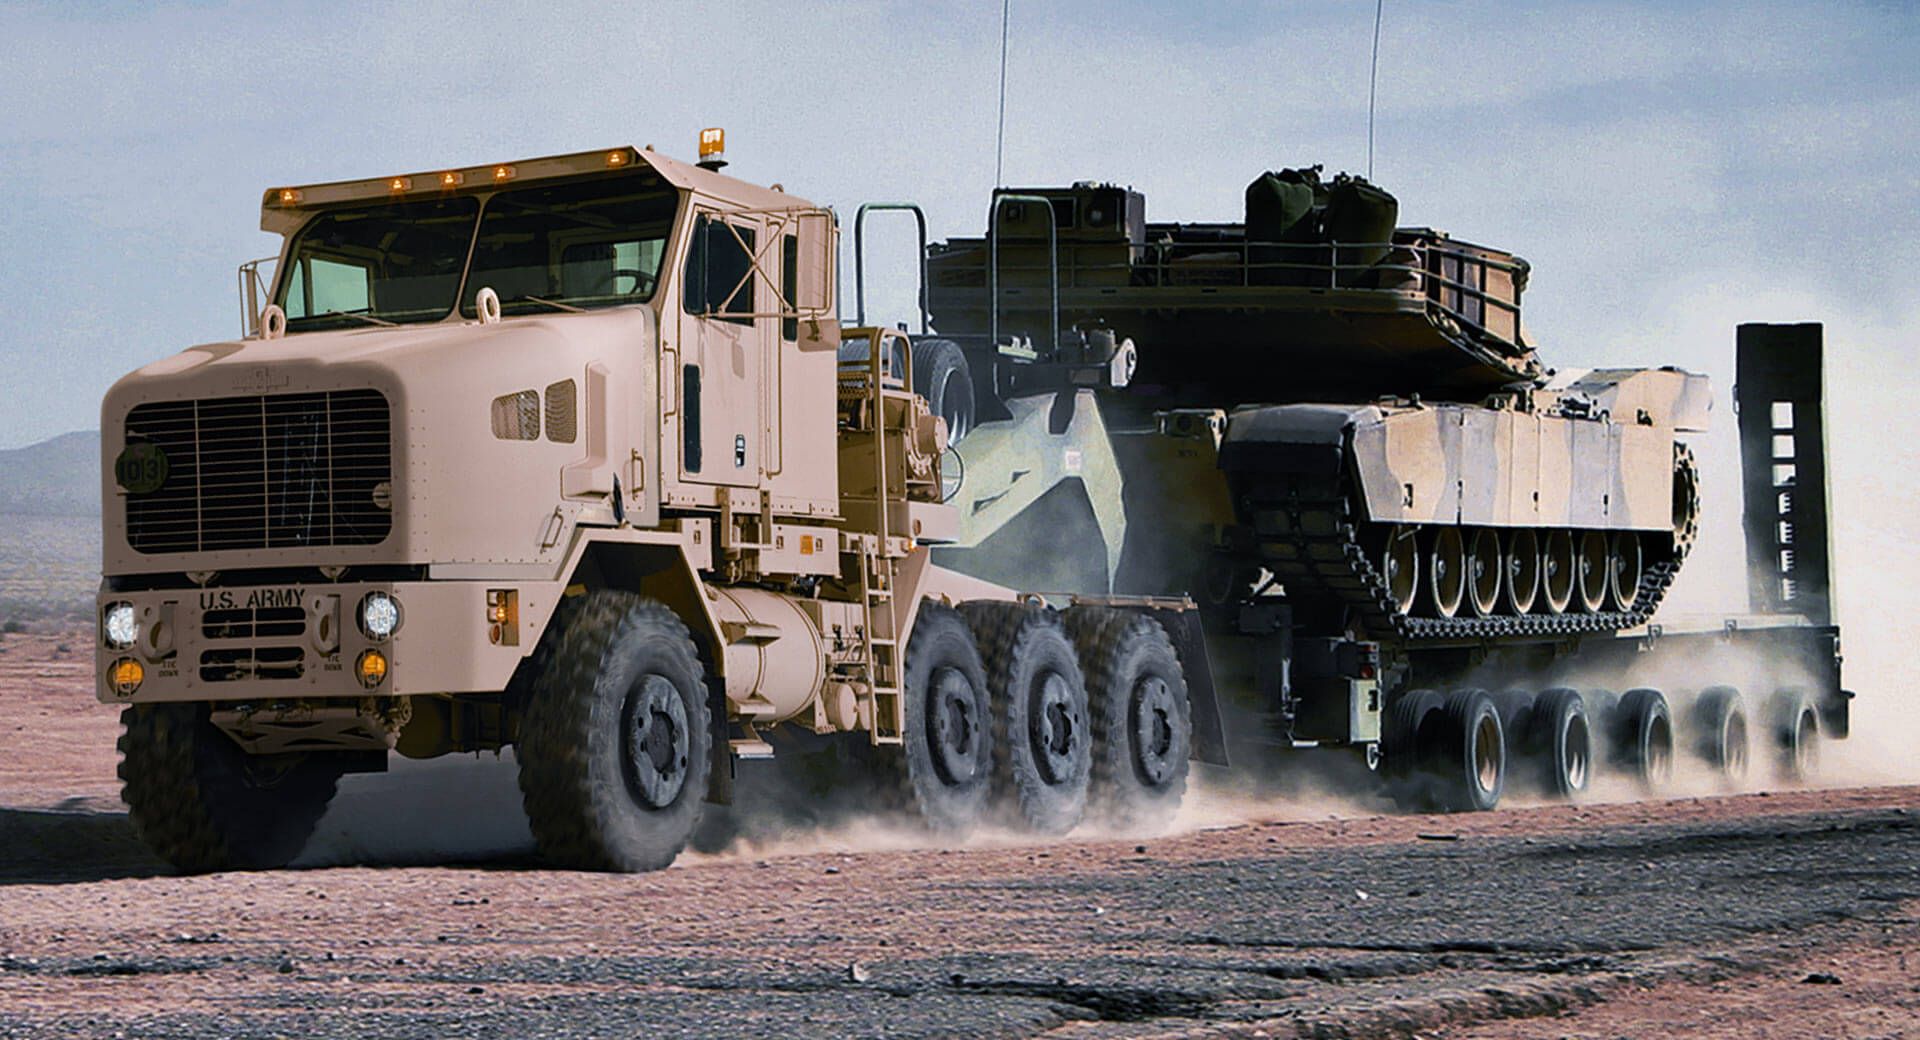 U.S. Military Wants Autonomous Vehicles To Deliver Supplies And Equipment ile ilgili gÃ¶rsel sonucu